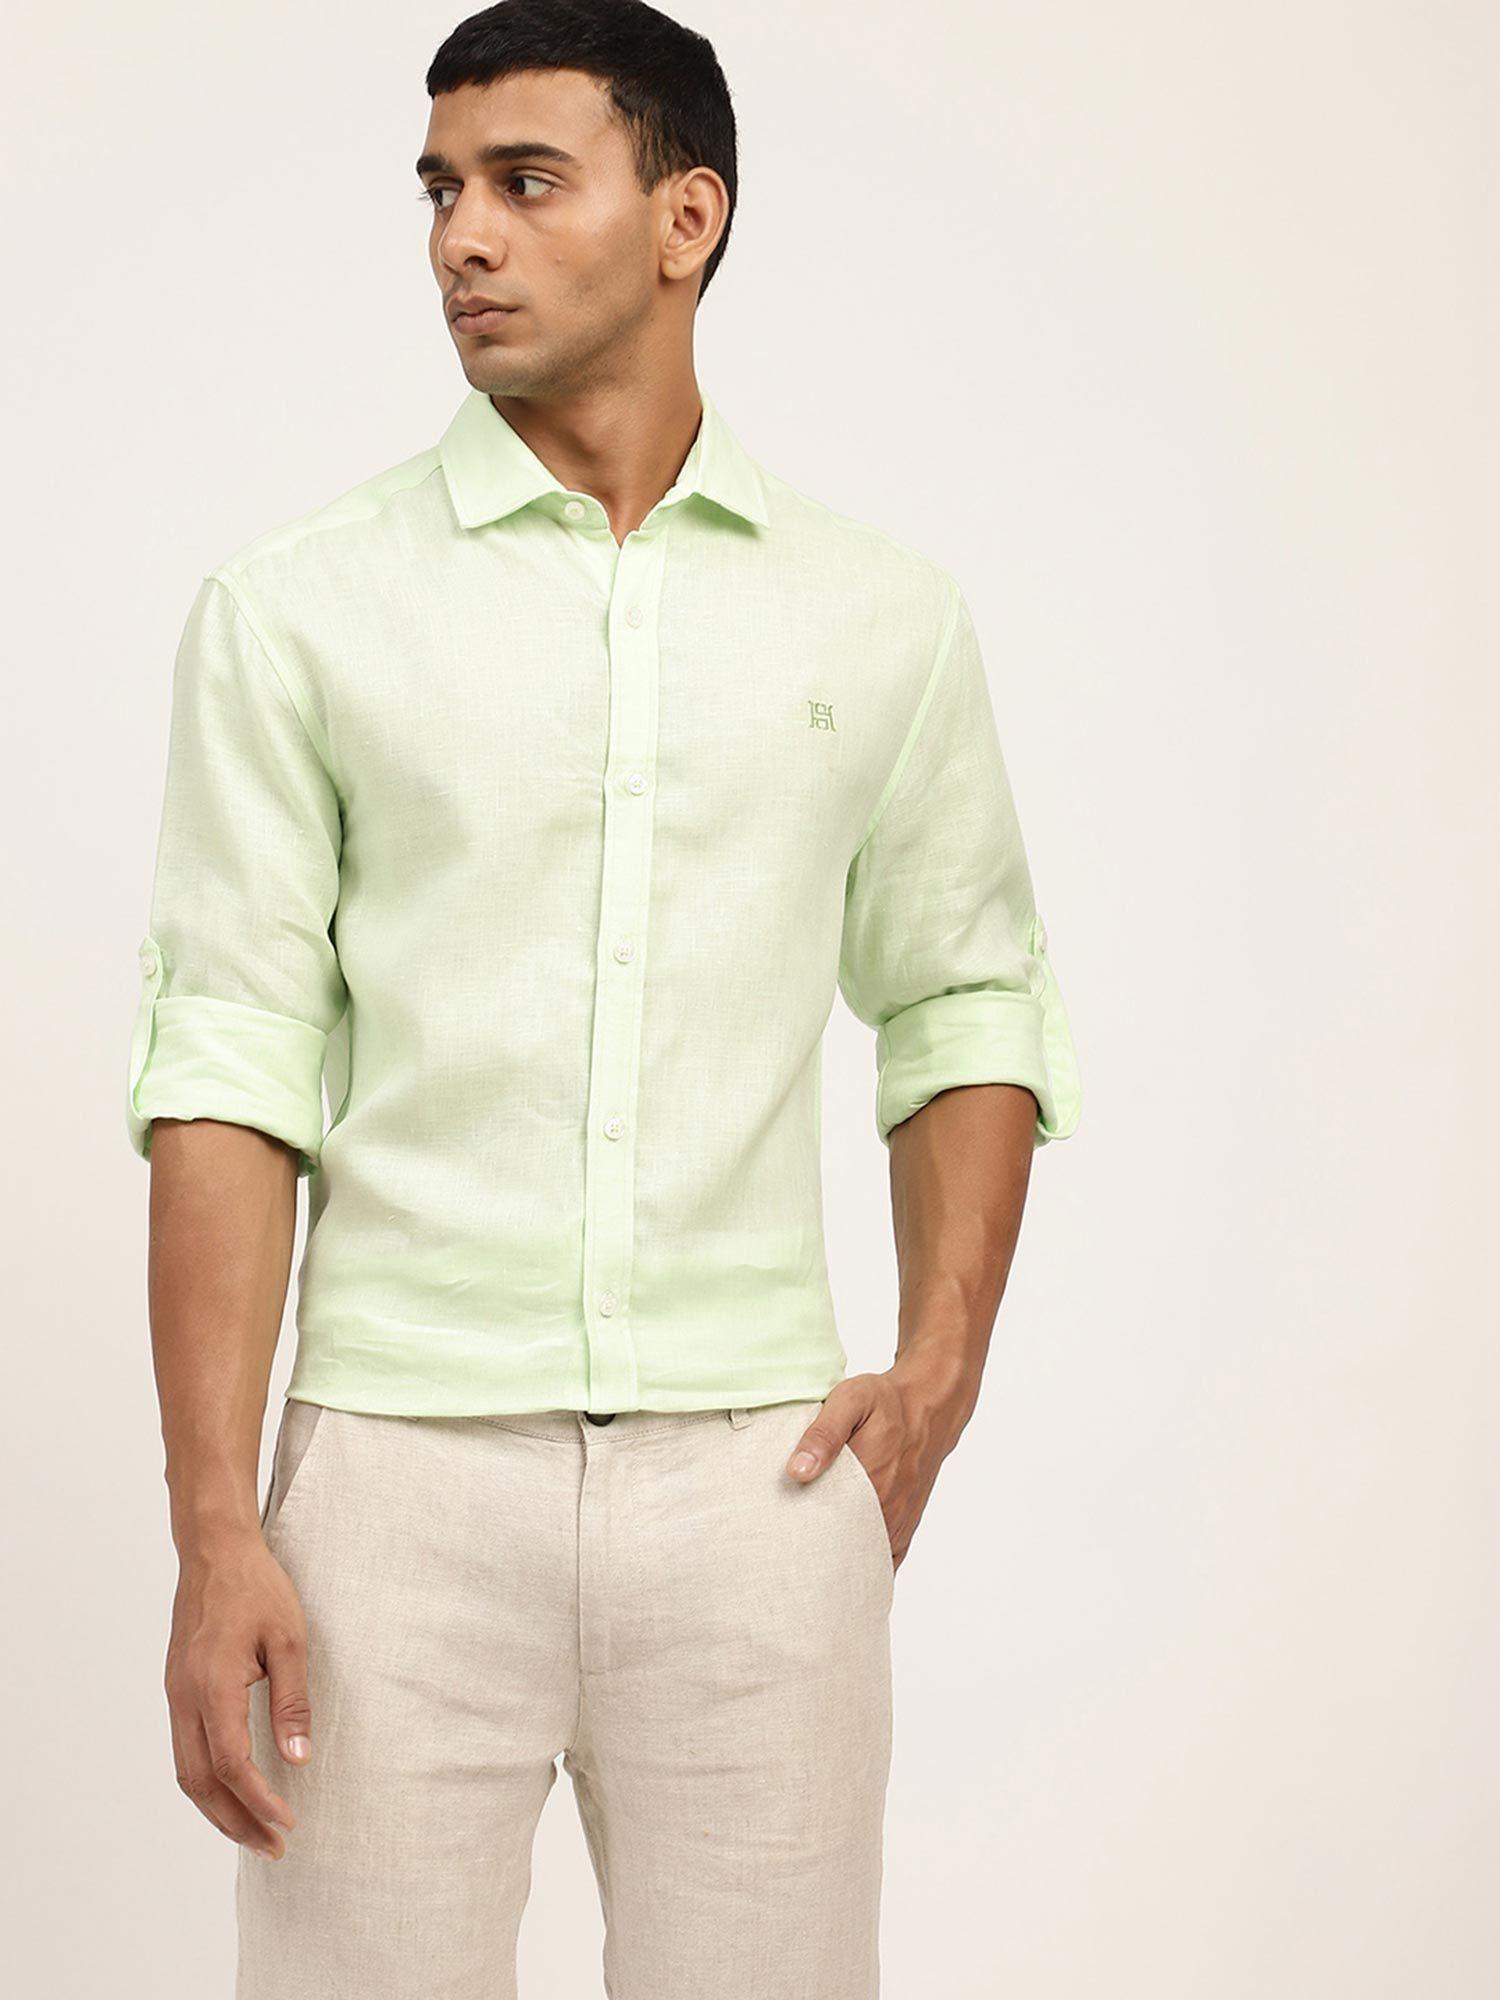 mens solid mint green regular shirt